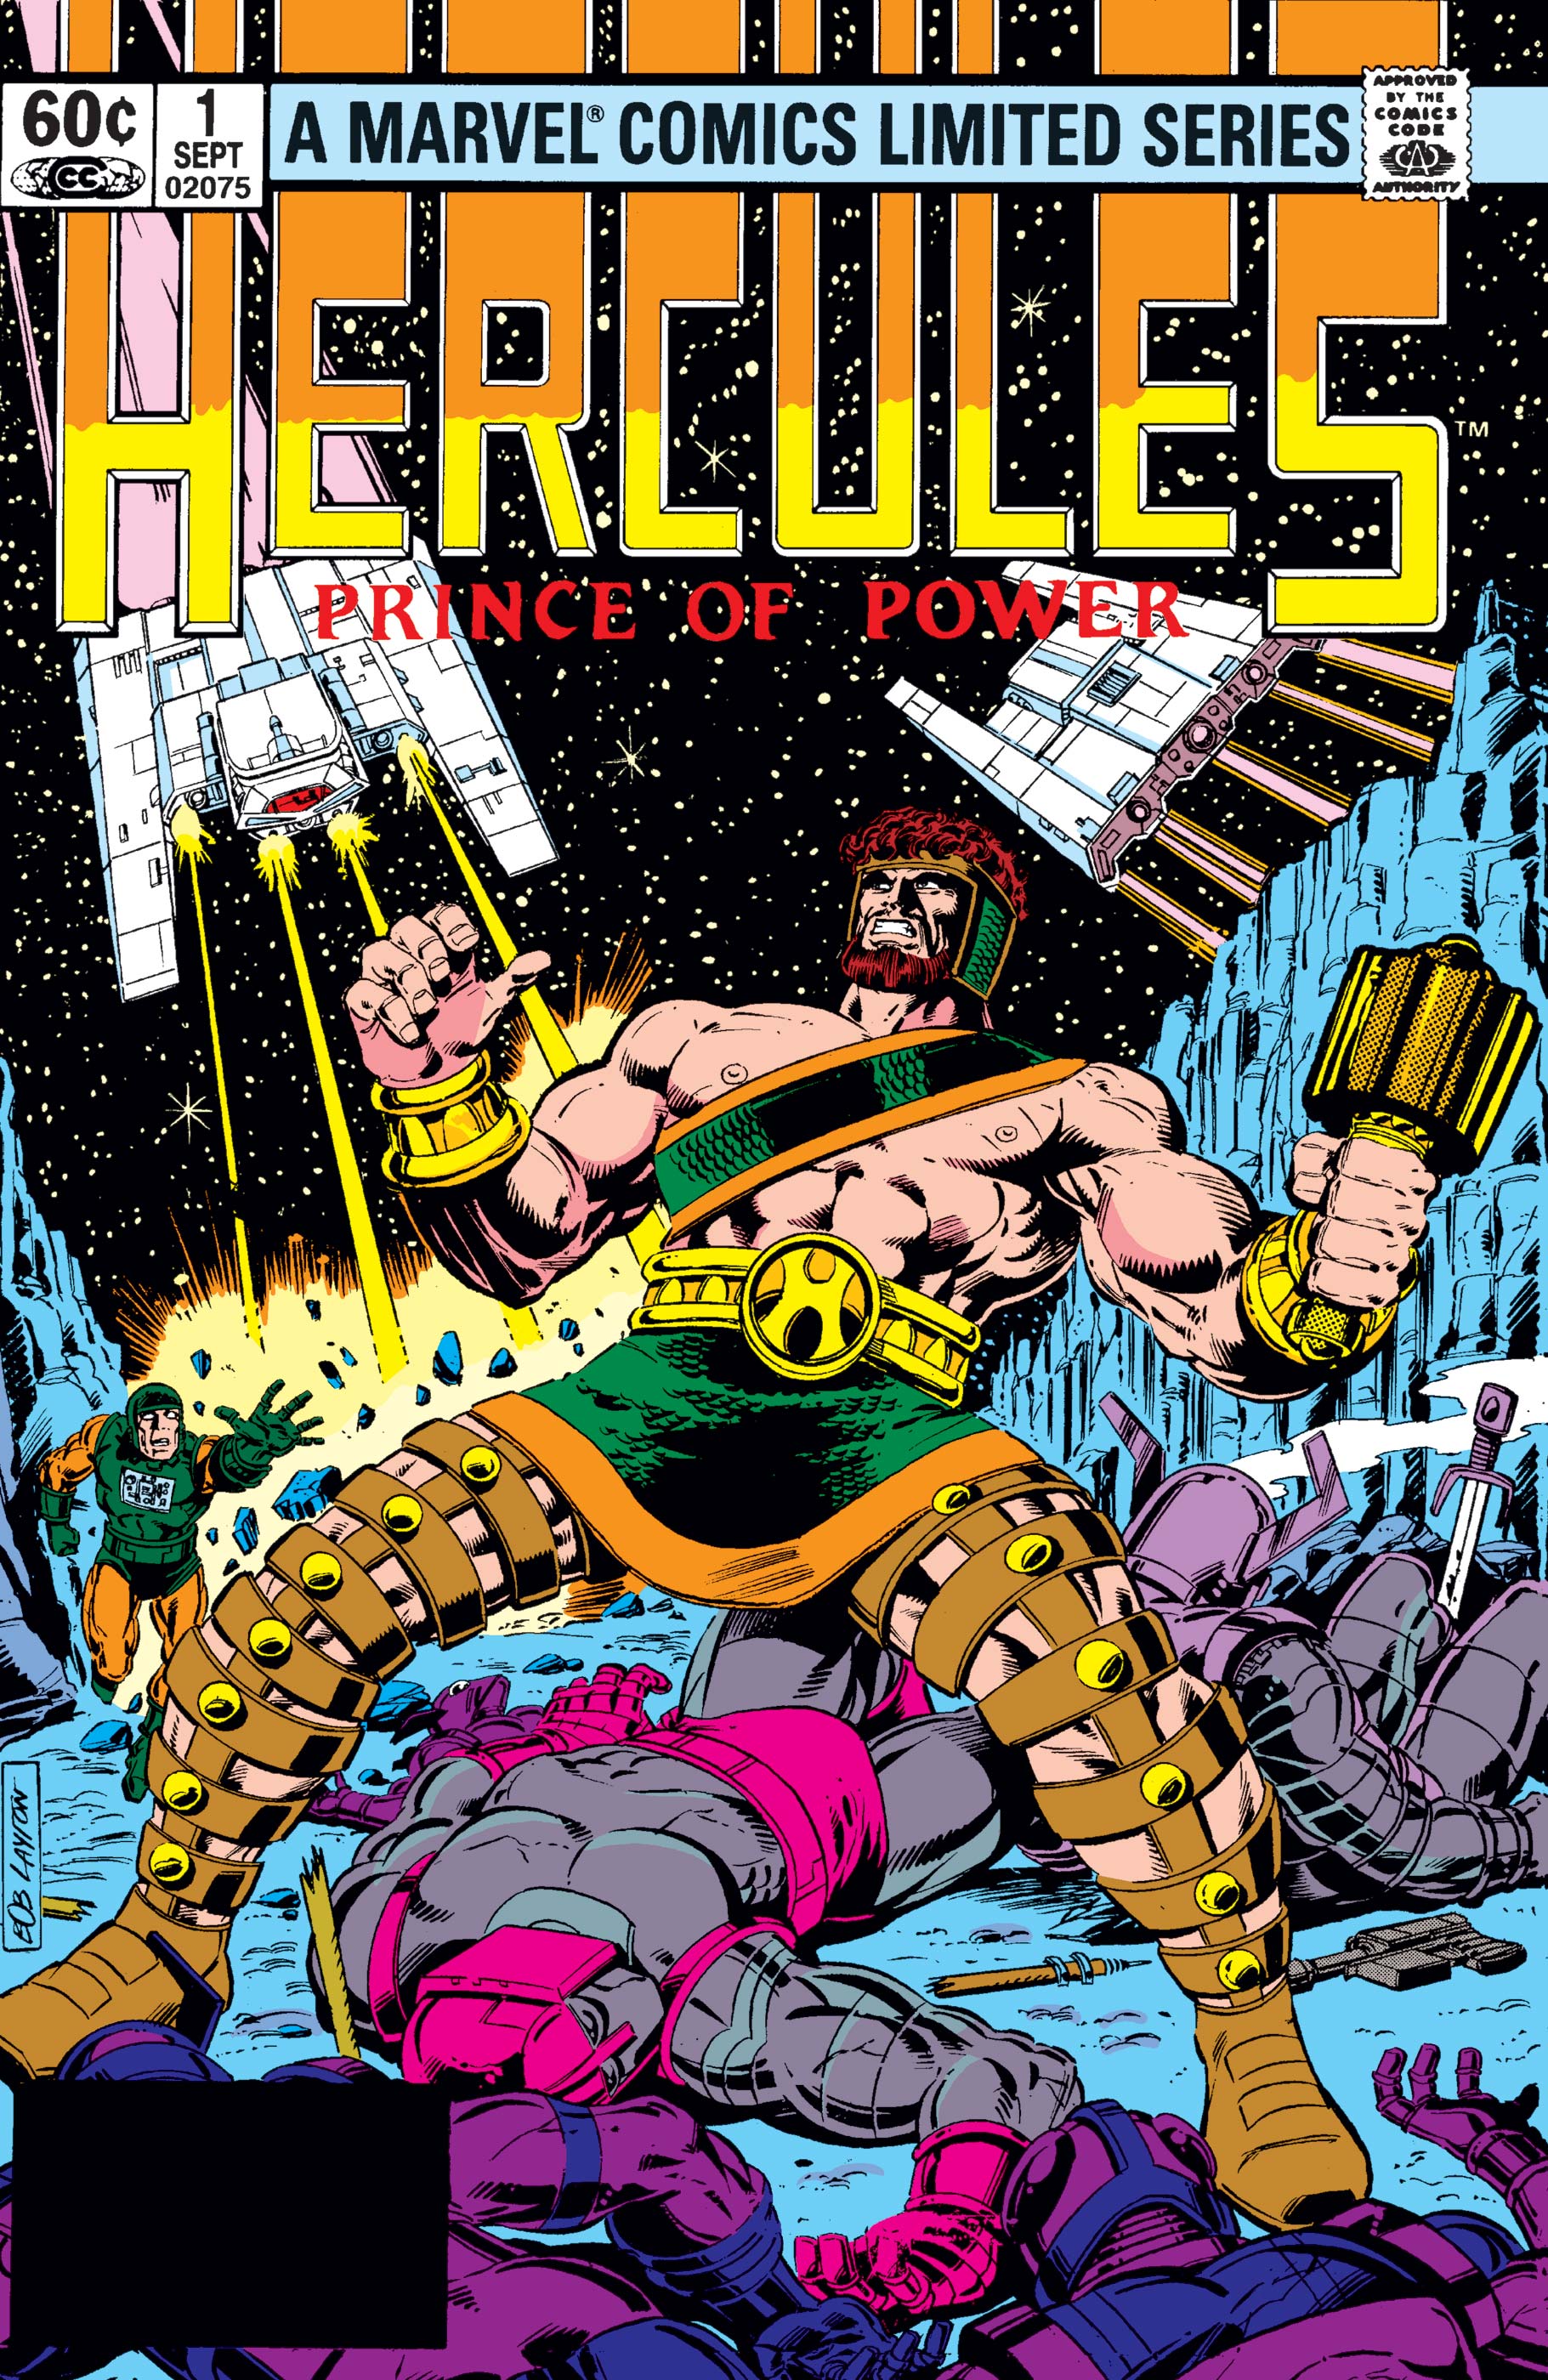 Hercules: Prince of Power (1982) #1